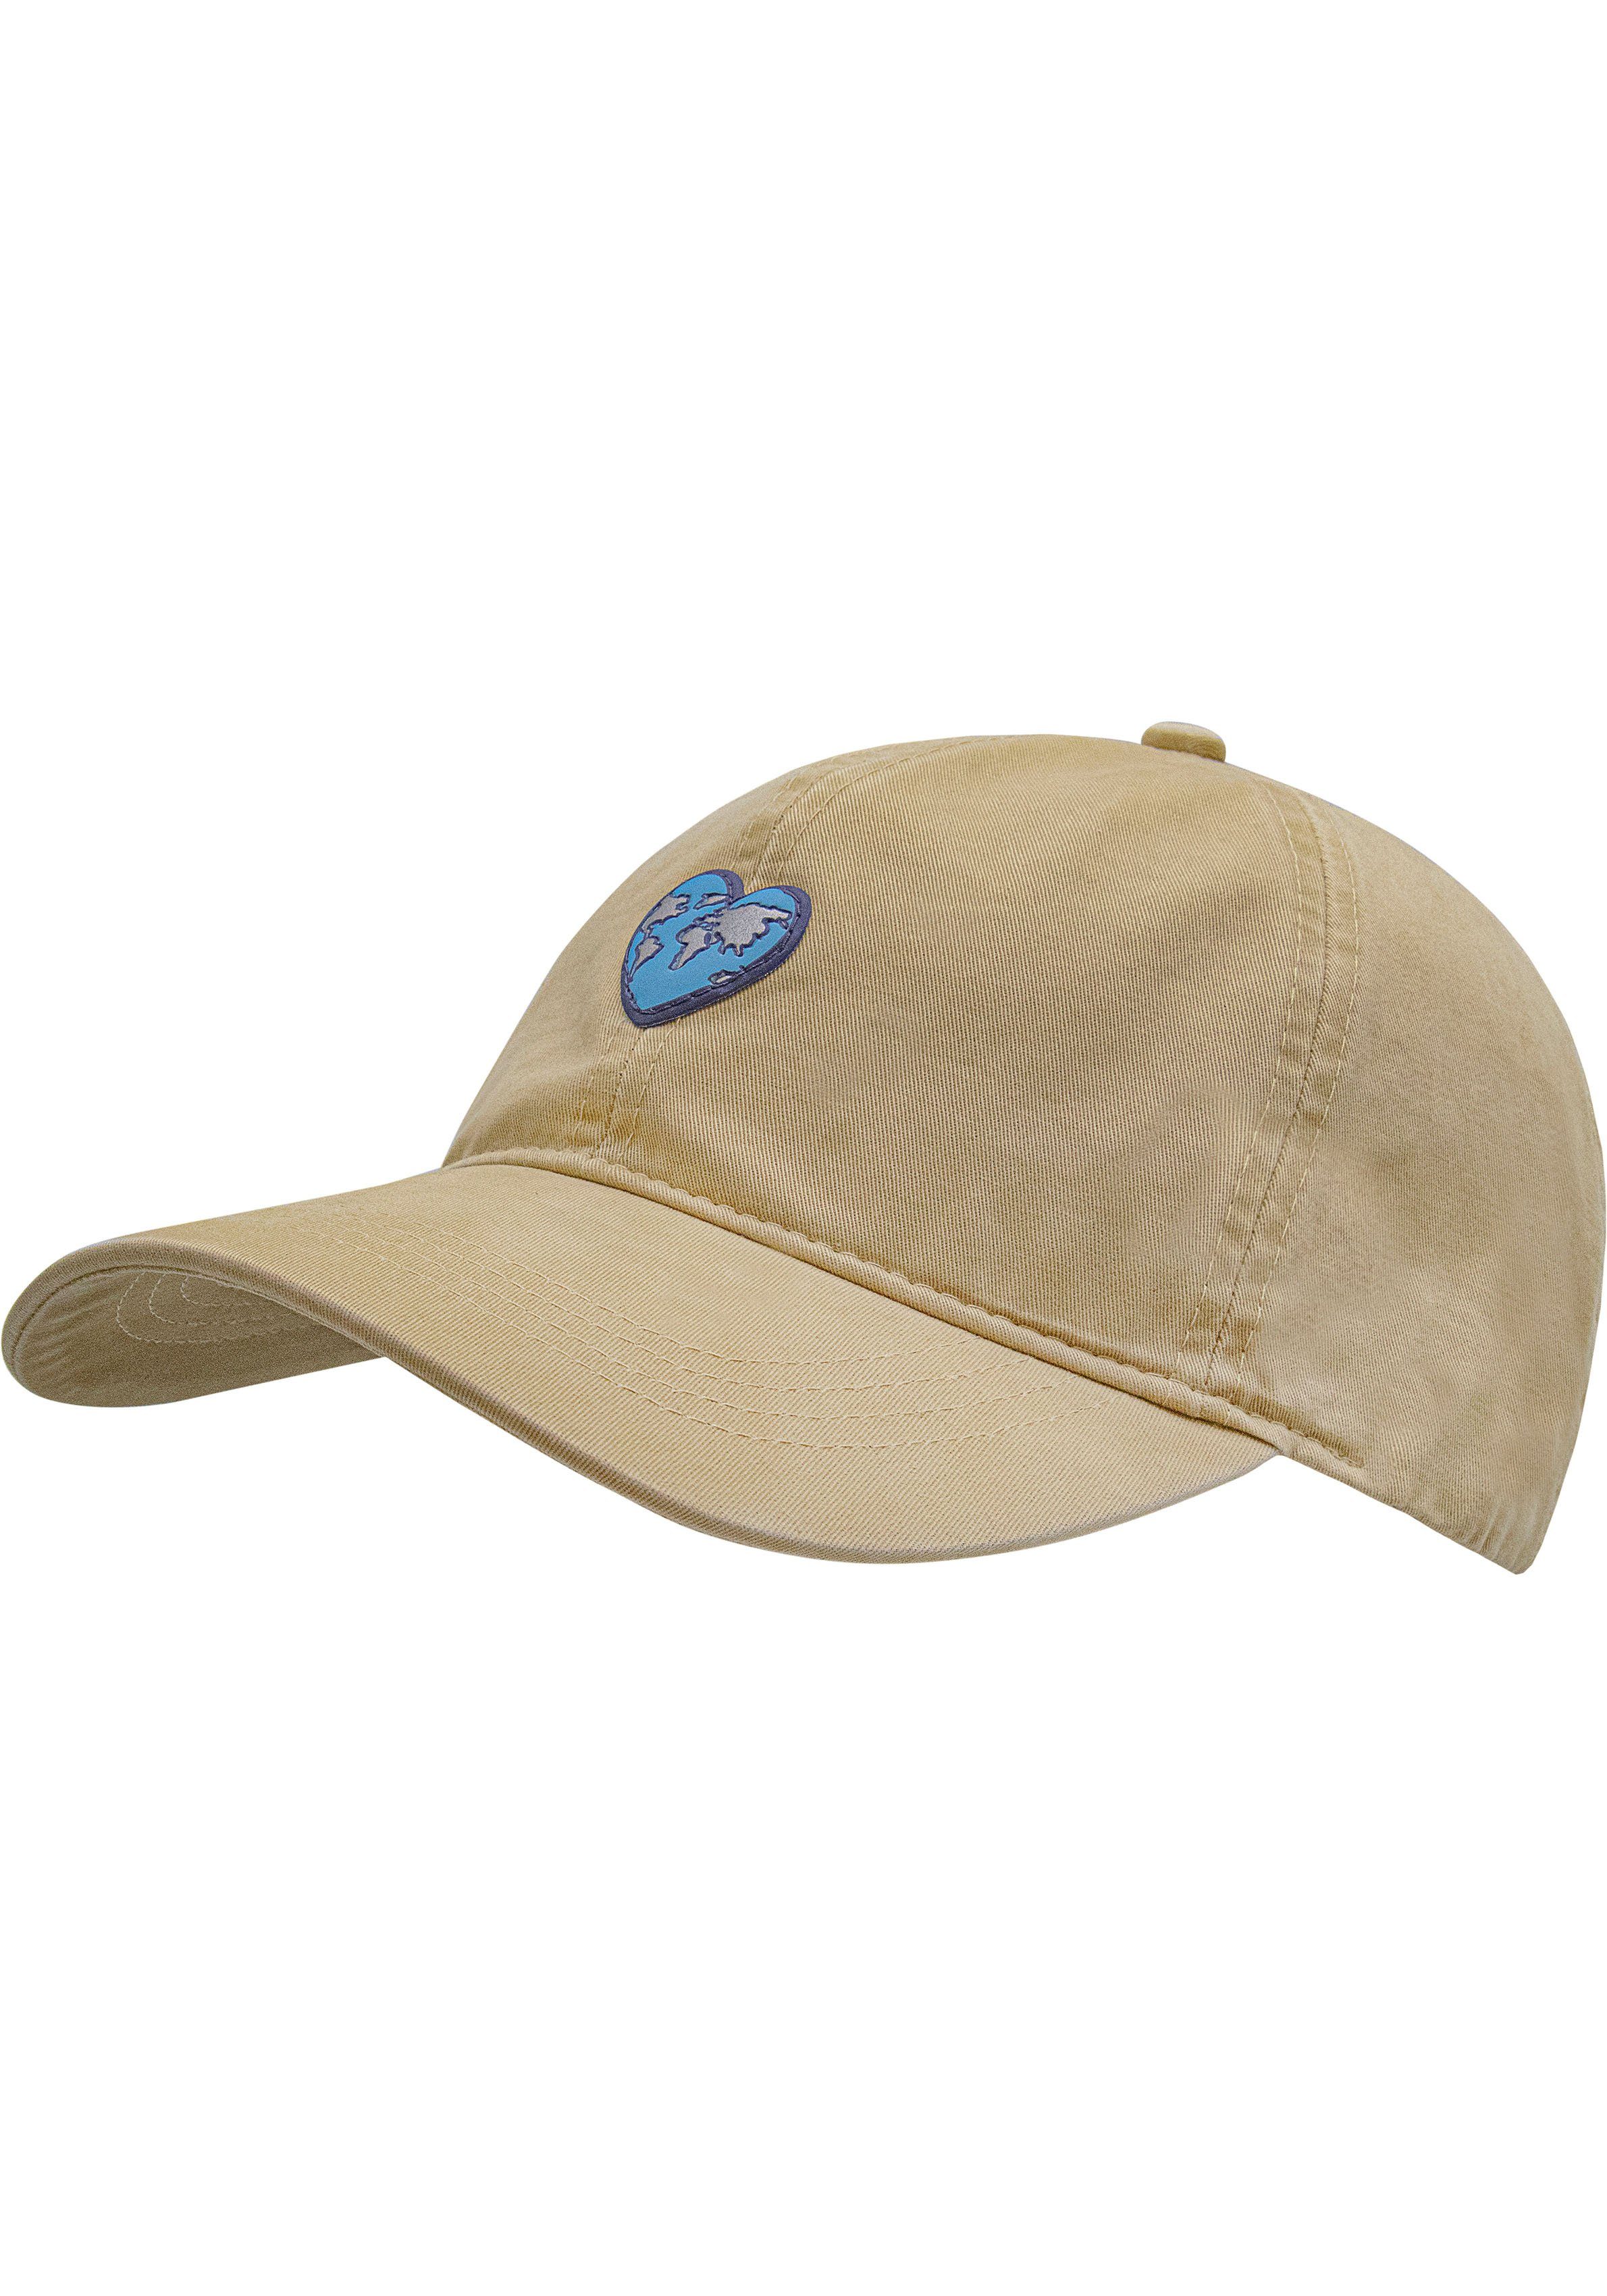 chillouts Baseball Cap Veracruz Hat beige | Baseball Caps